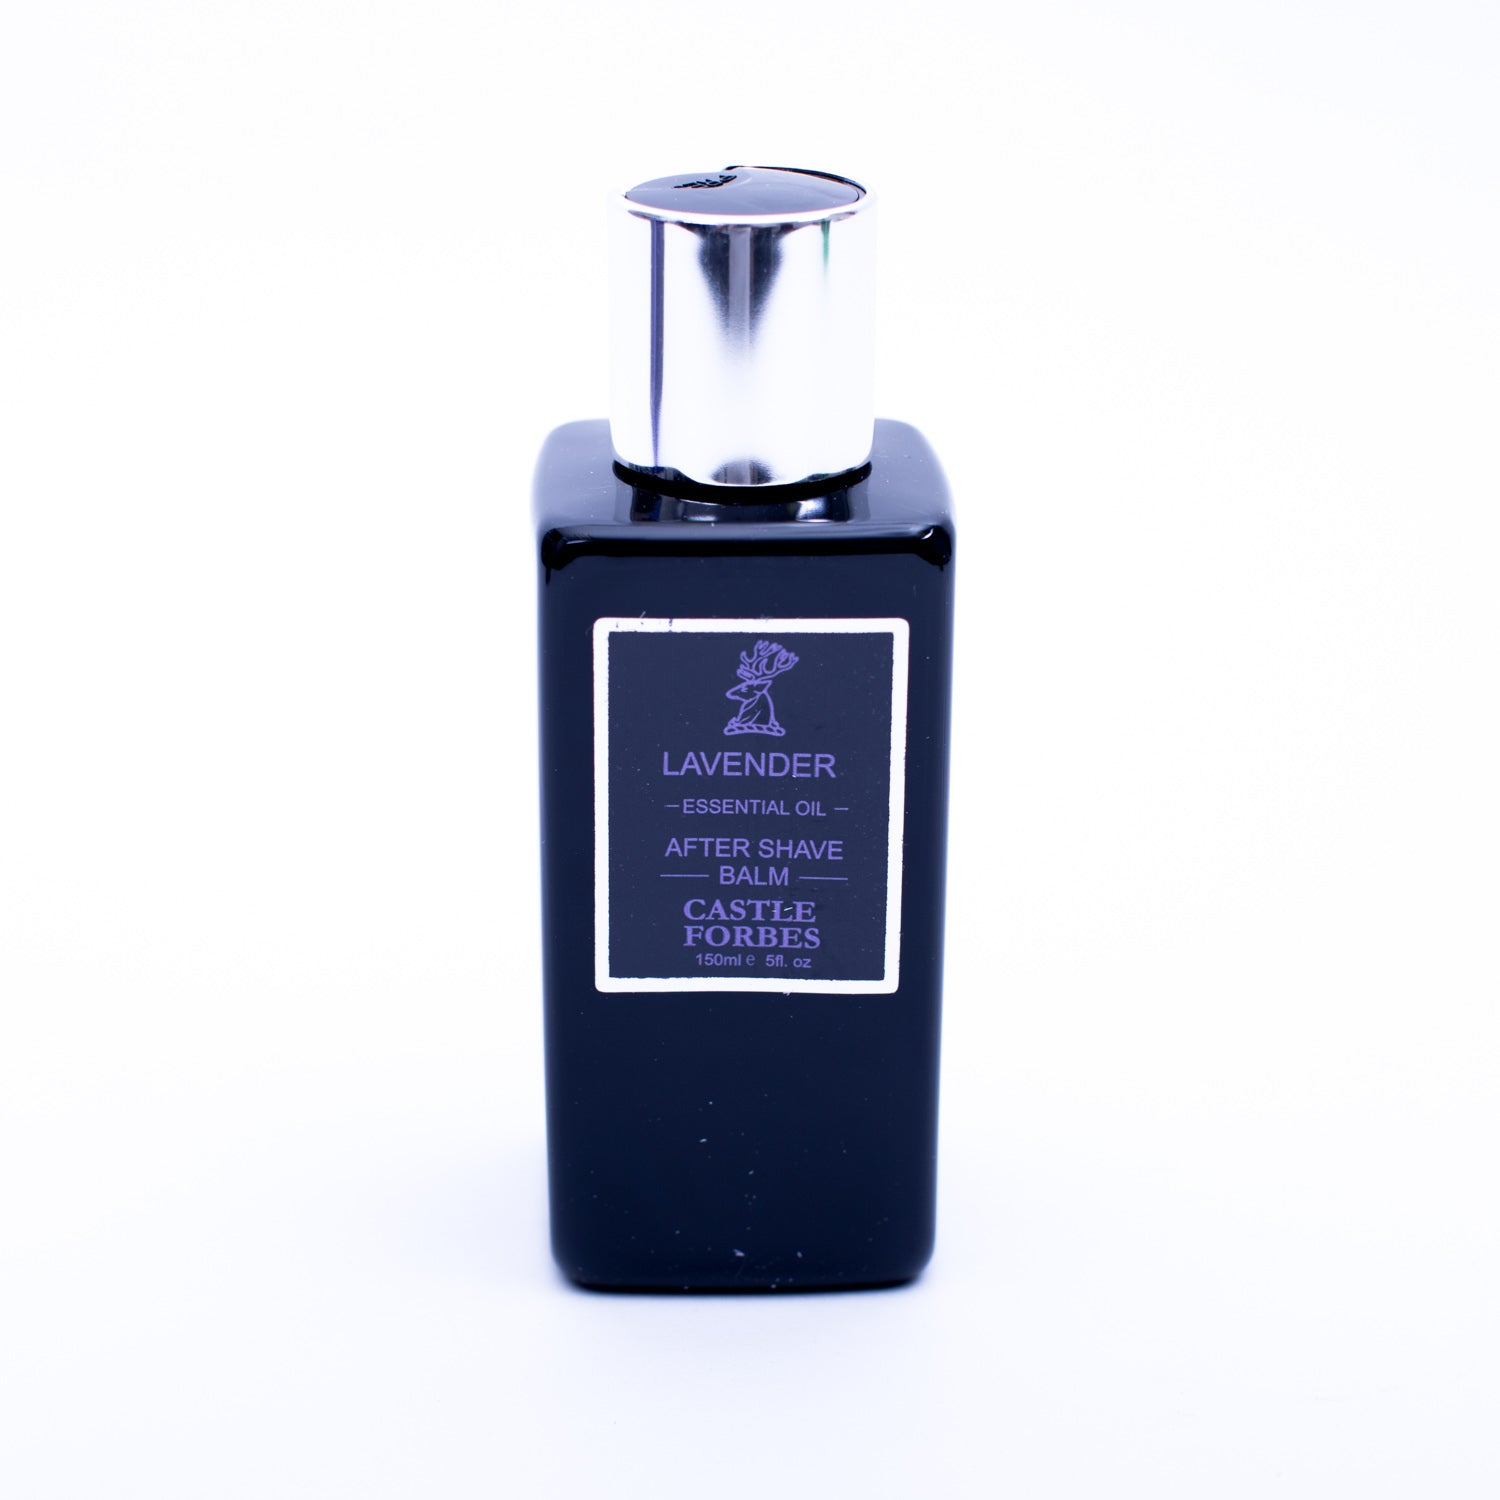 Castle Forbes Lavender Essential Aftershave Balm